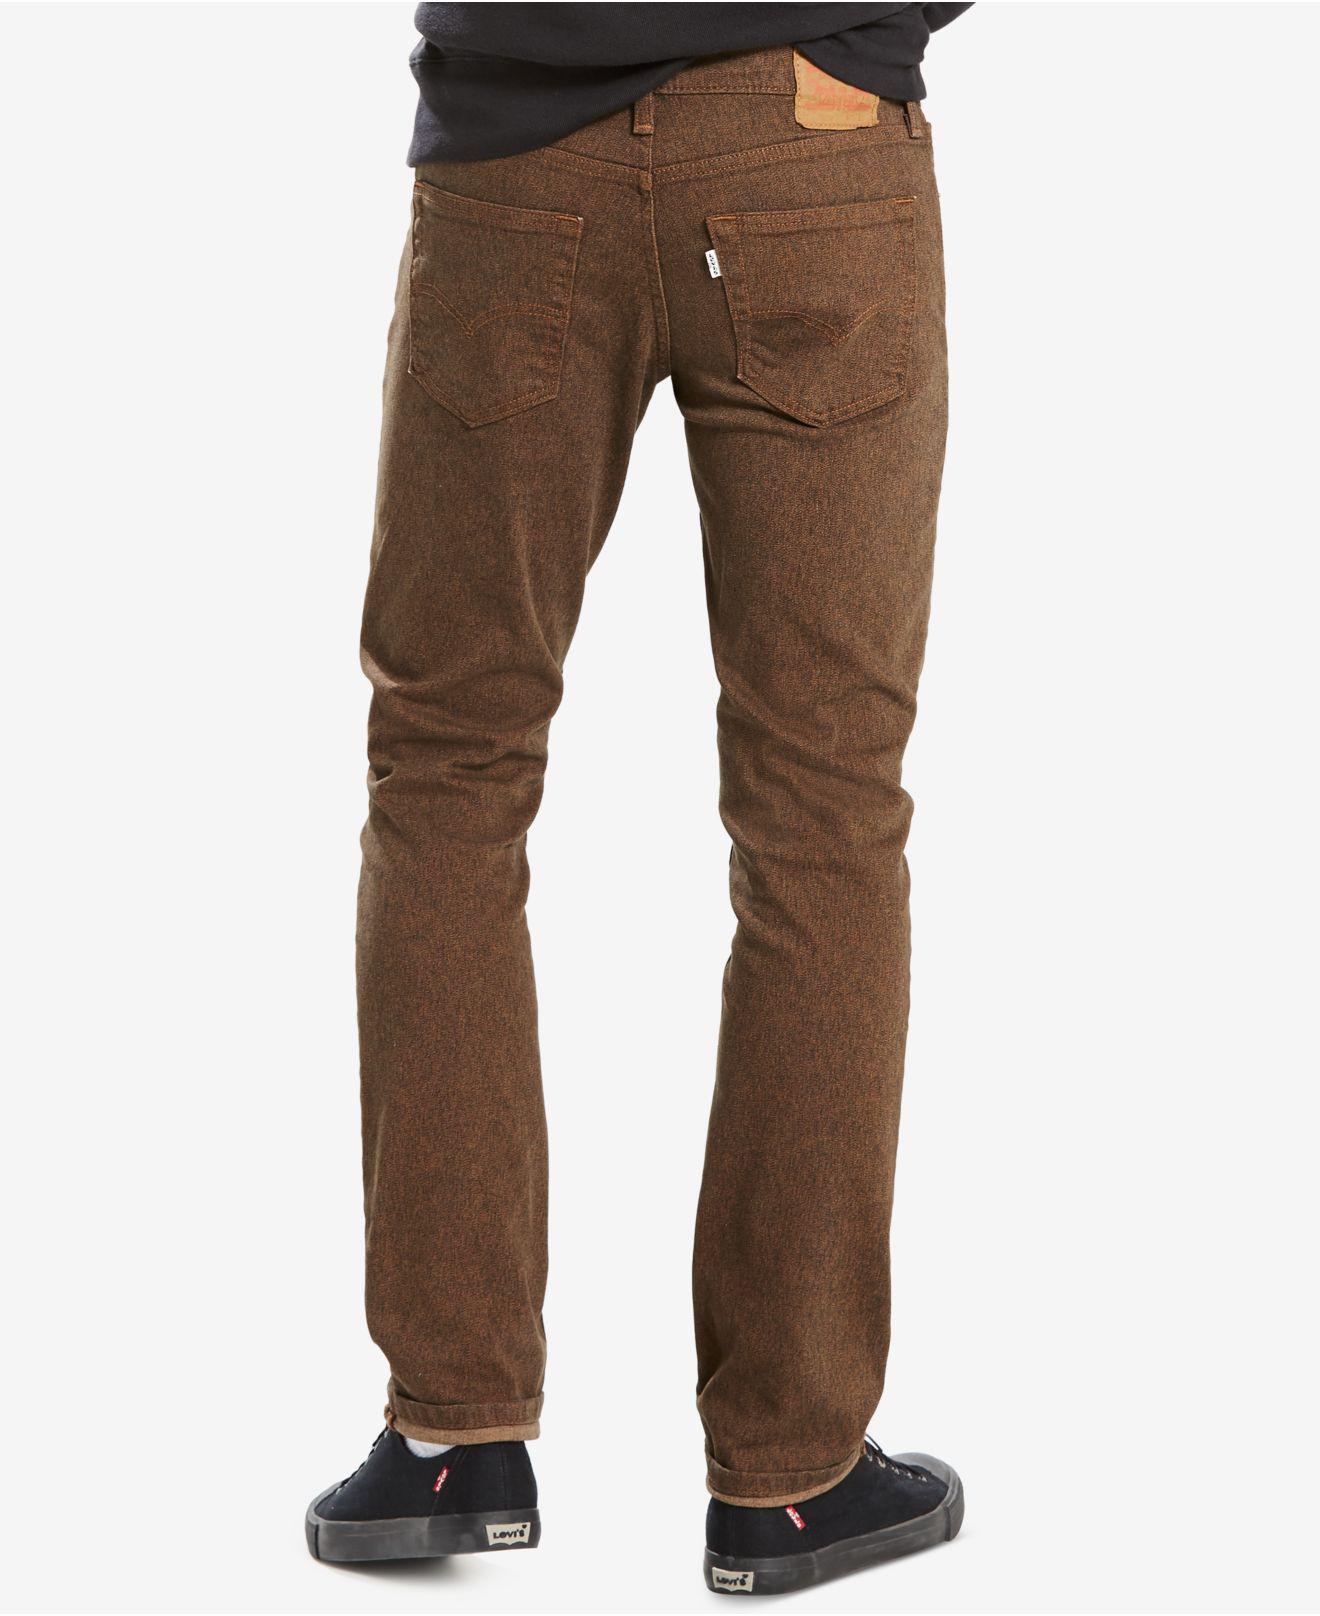 Lyst - Levi's Men's 511tm Slim-fit Stretch Jaspee Jeans in Brown for Men